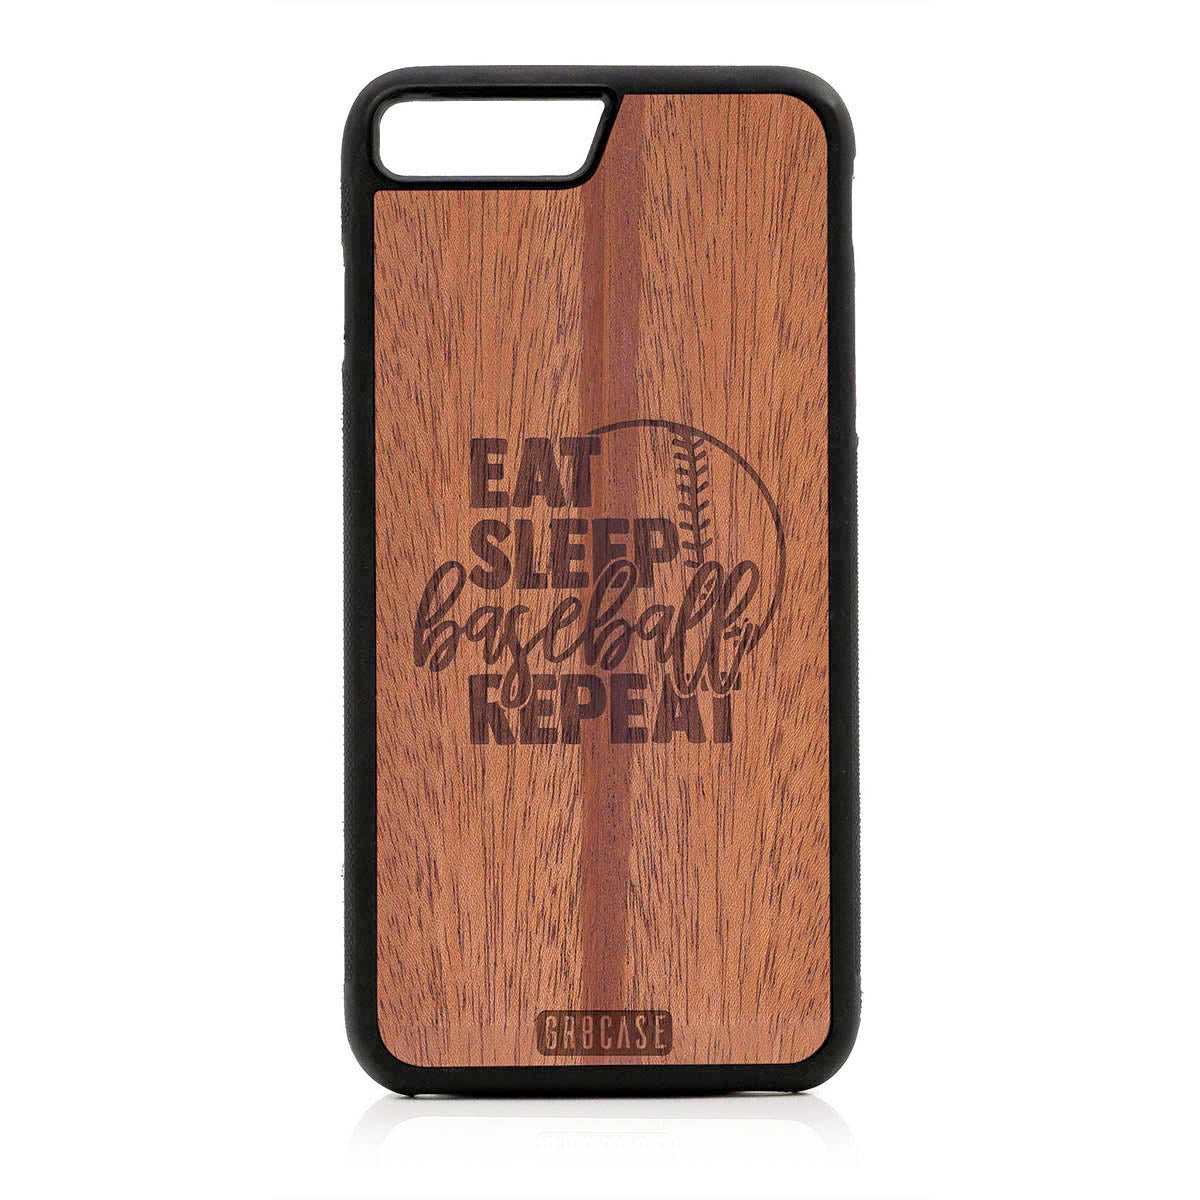 Eat Sleep Baseball Repeat Design Wood Case For iPhone 7 Plus / 8 Plus